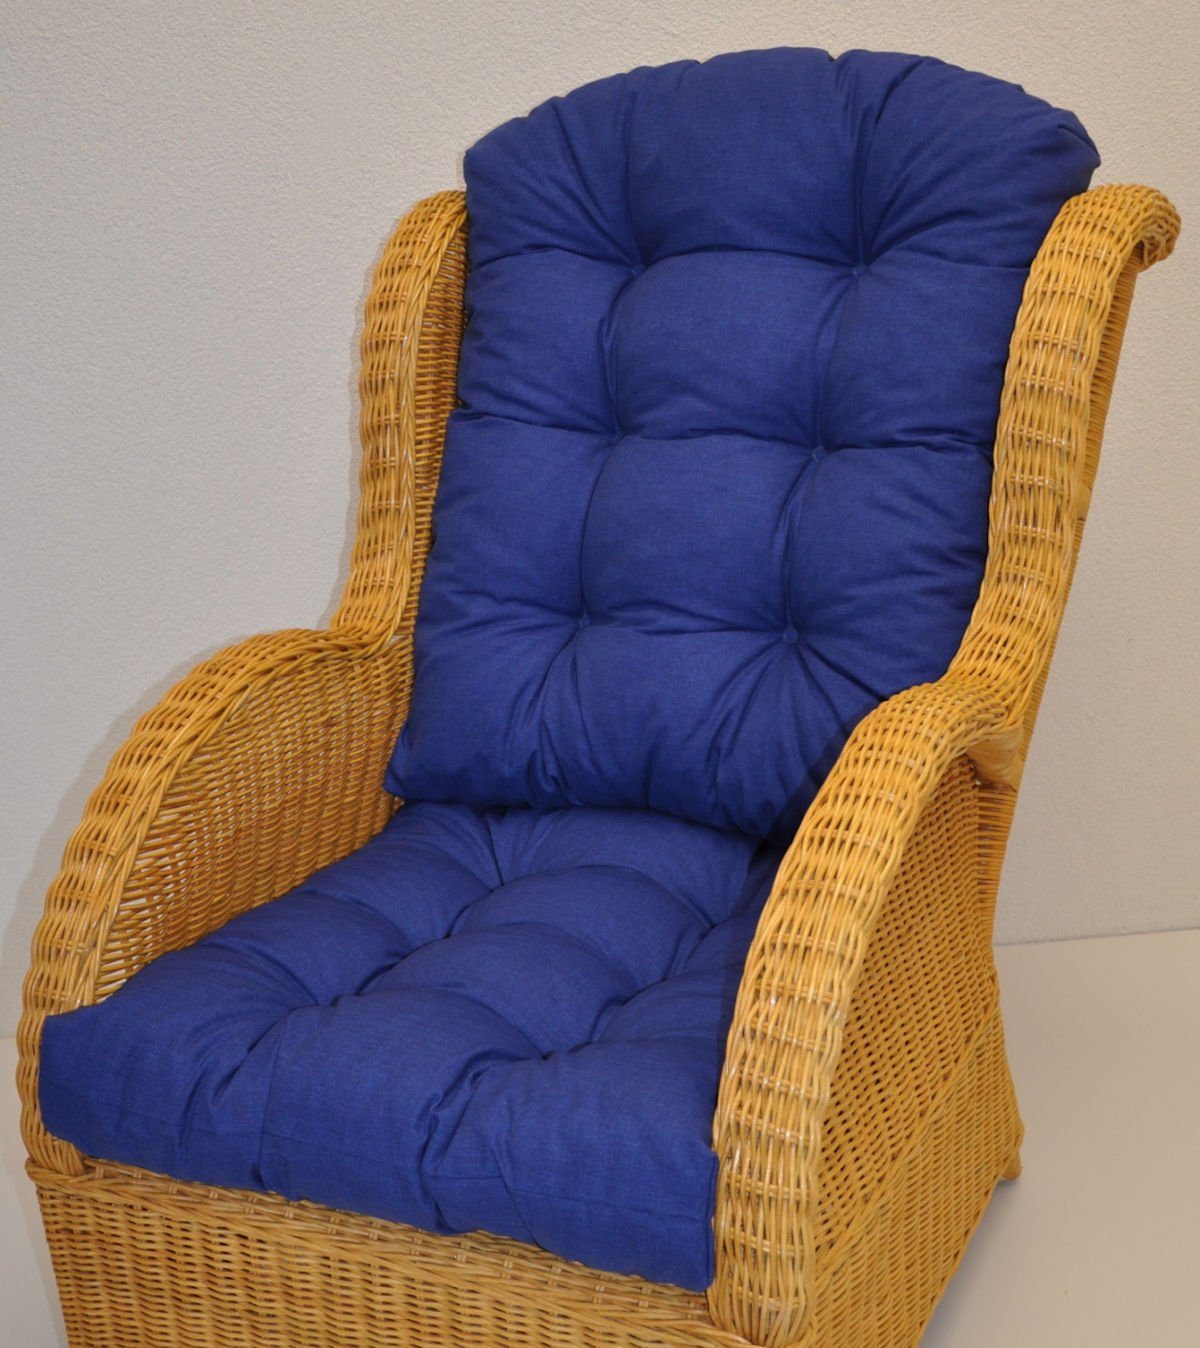 Rattani Sesselauflage Polster Kissen für Rattan Ohrensessel Rattansessel, Color dunkelblau